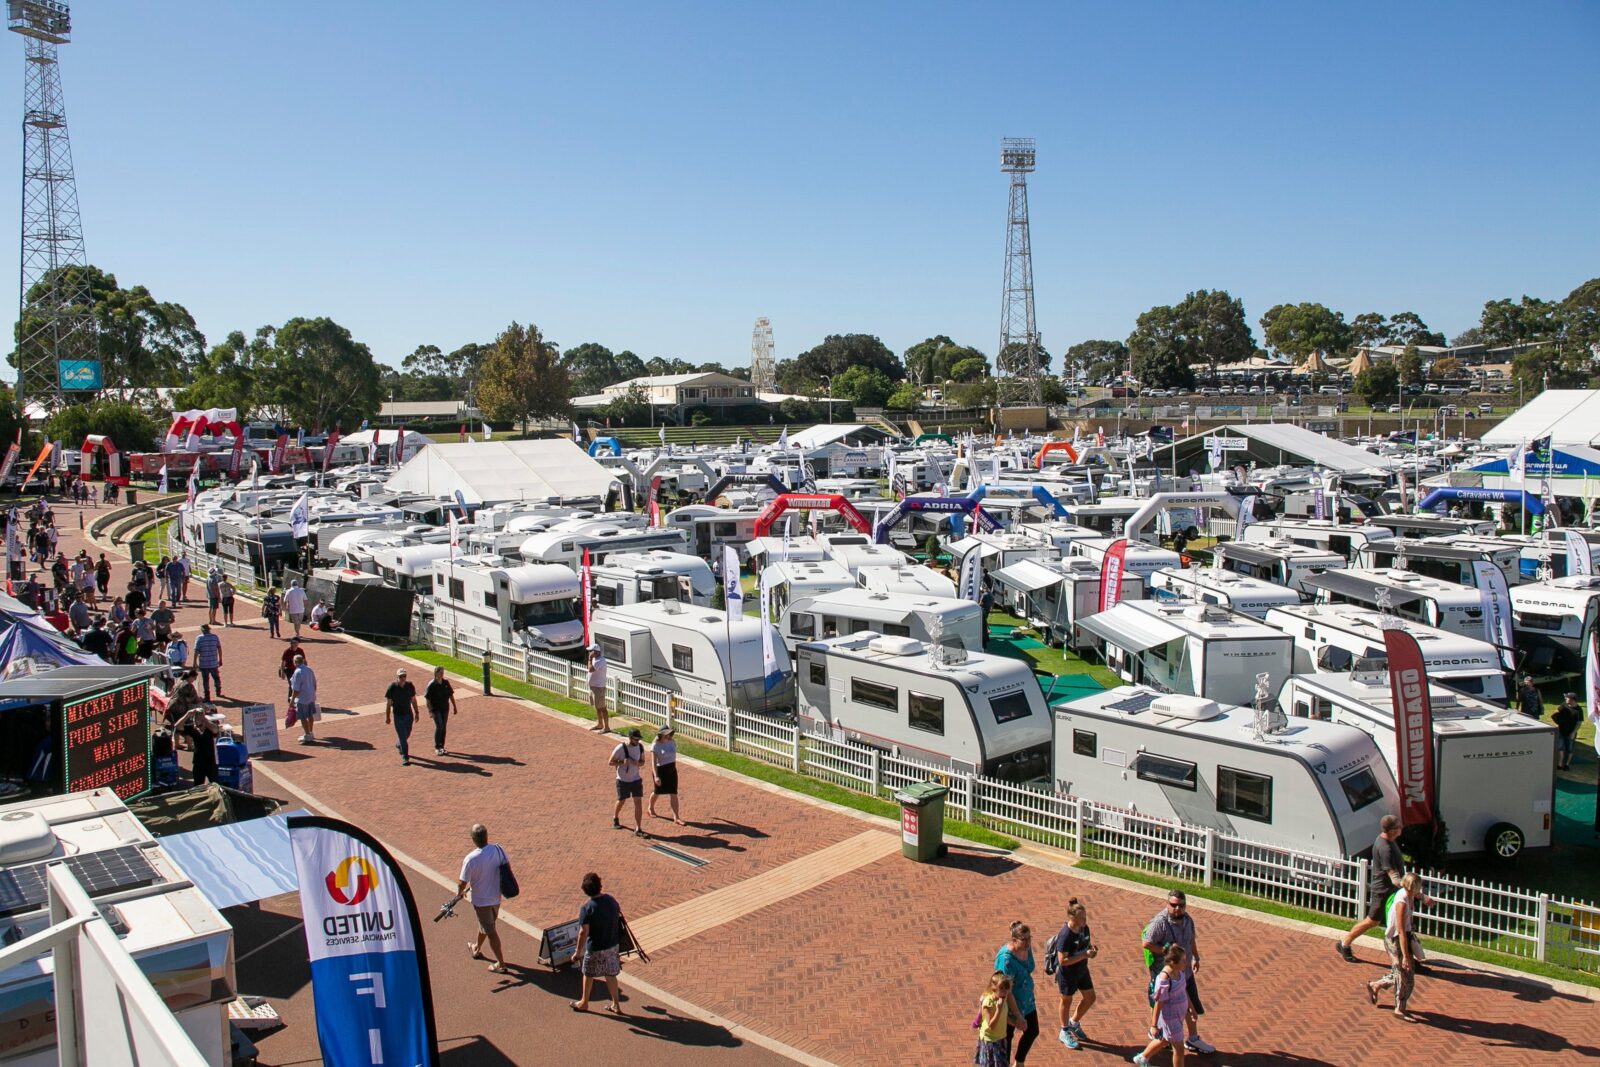 Perth Caravan and Camping Show, Claremont, Western Australia